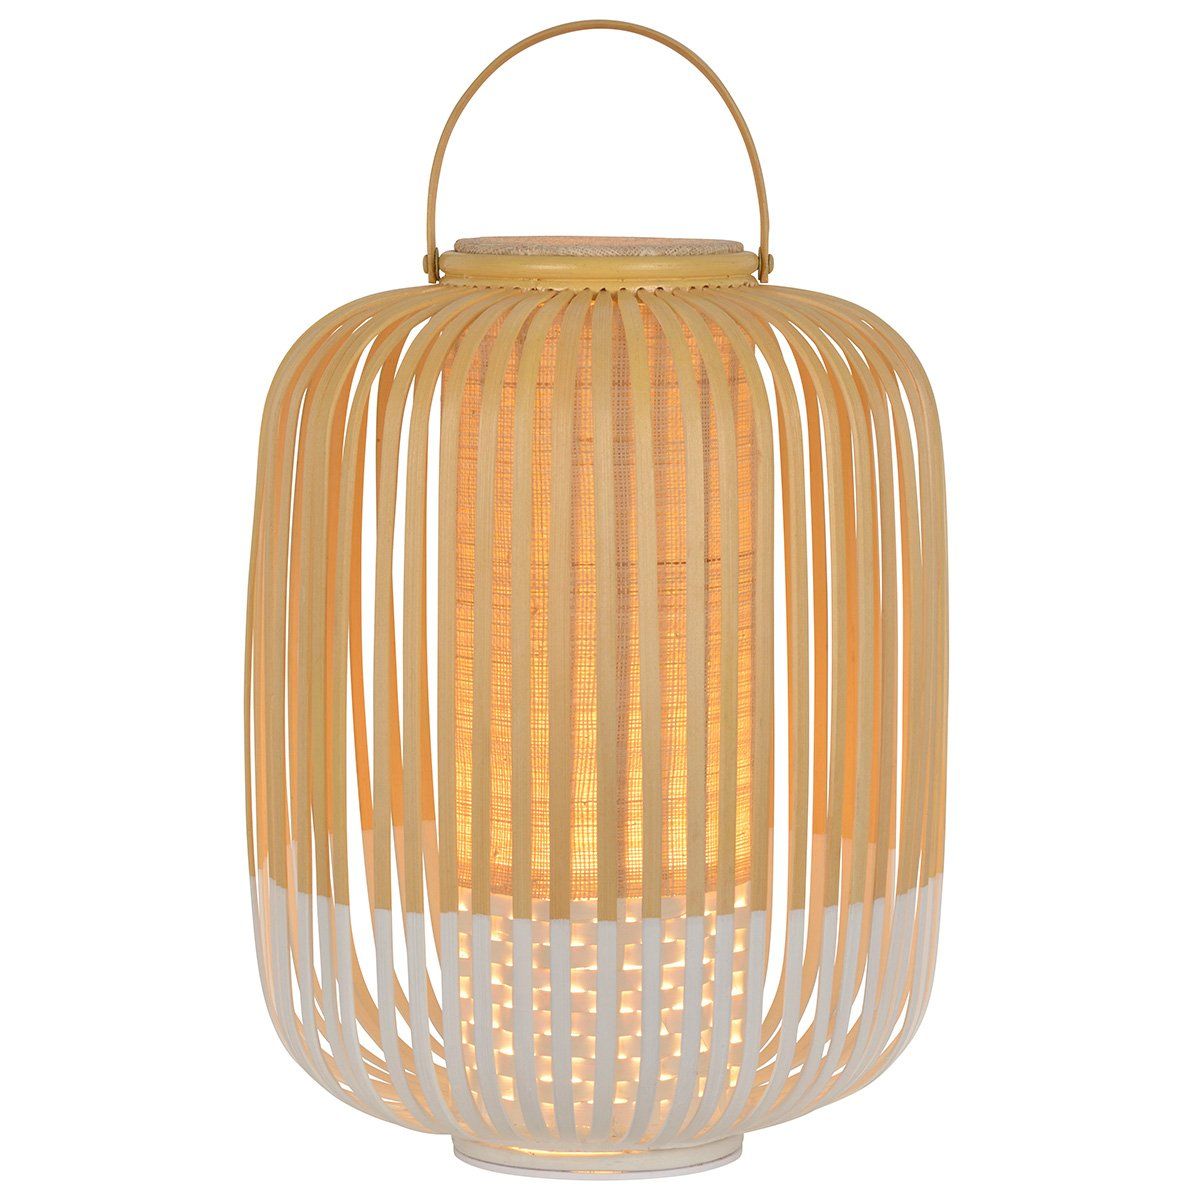 Lampe LED TAKE A WAY taille M en bambou blanc